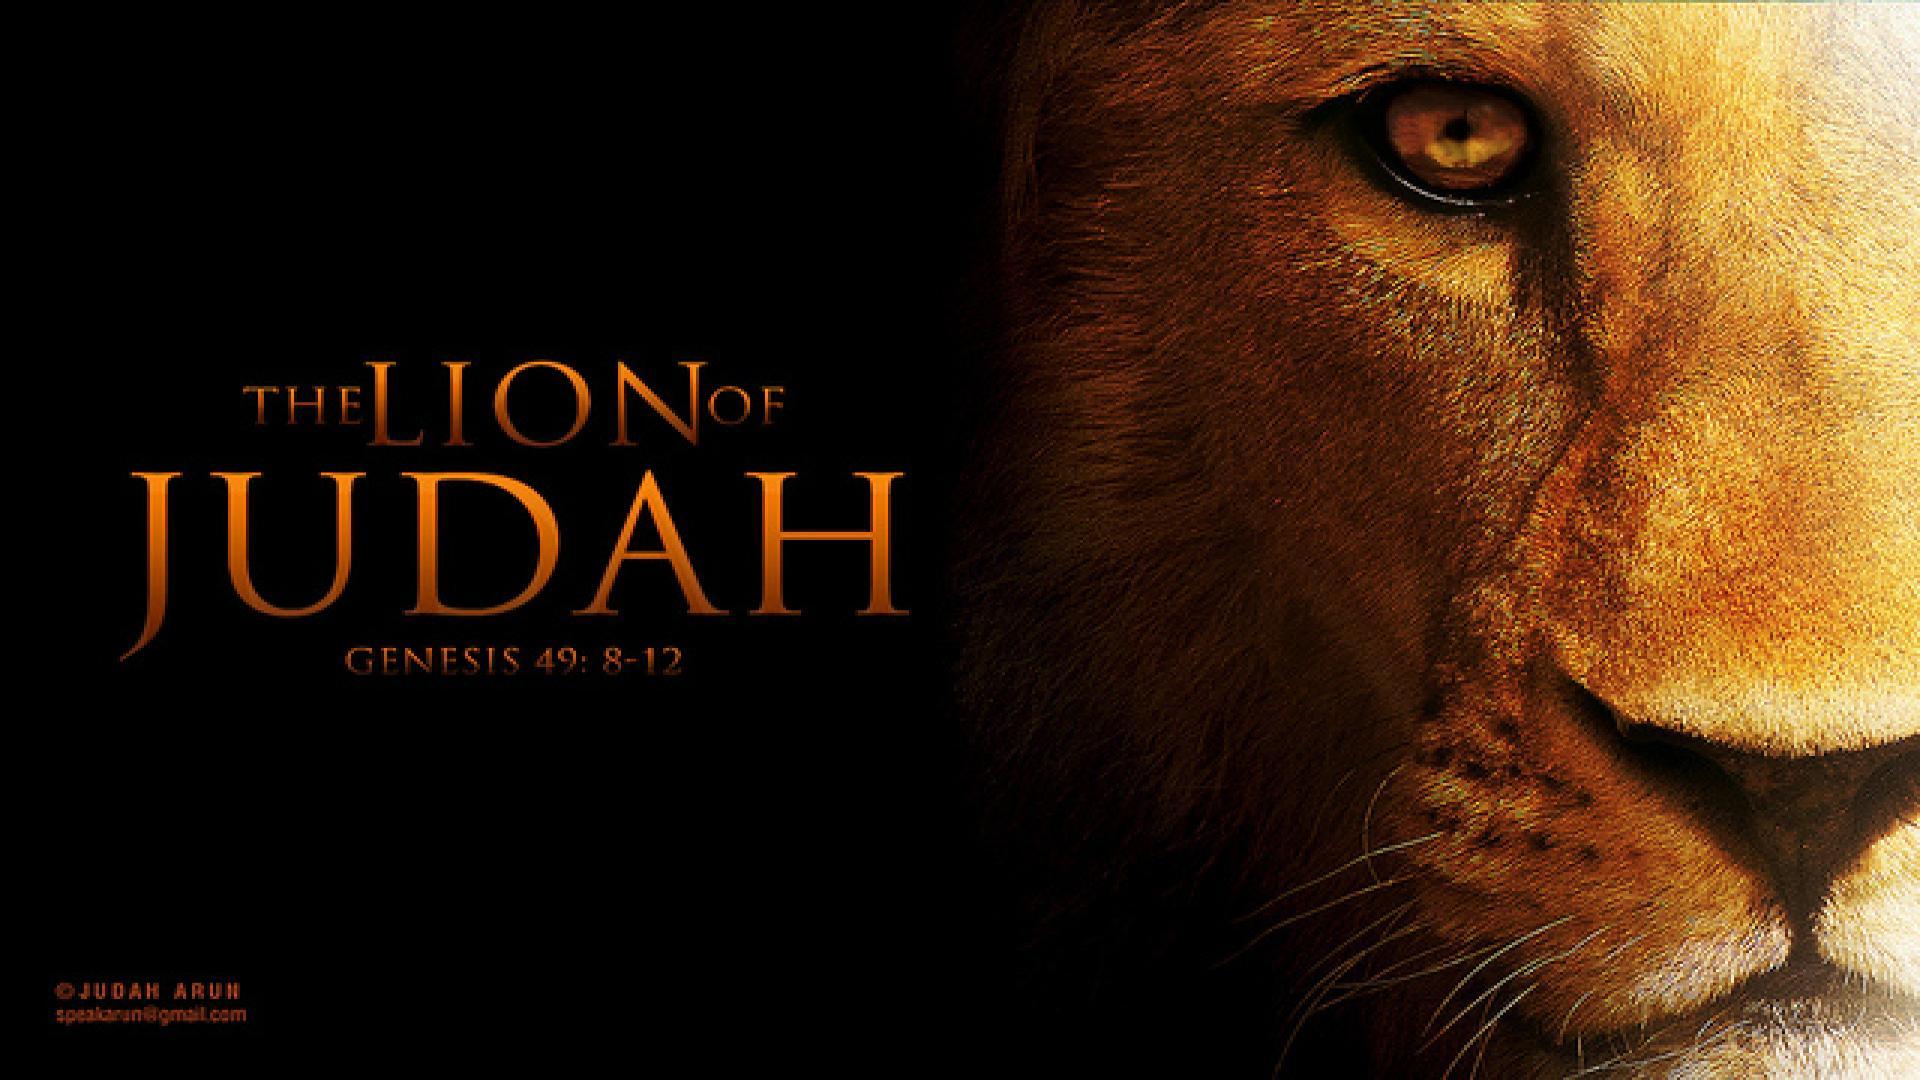 Lion Of Judah Wallpaper (640x400 px, 0.17 Mb)